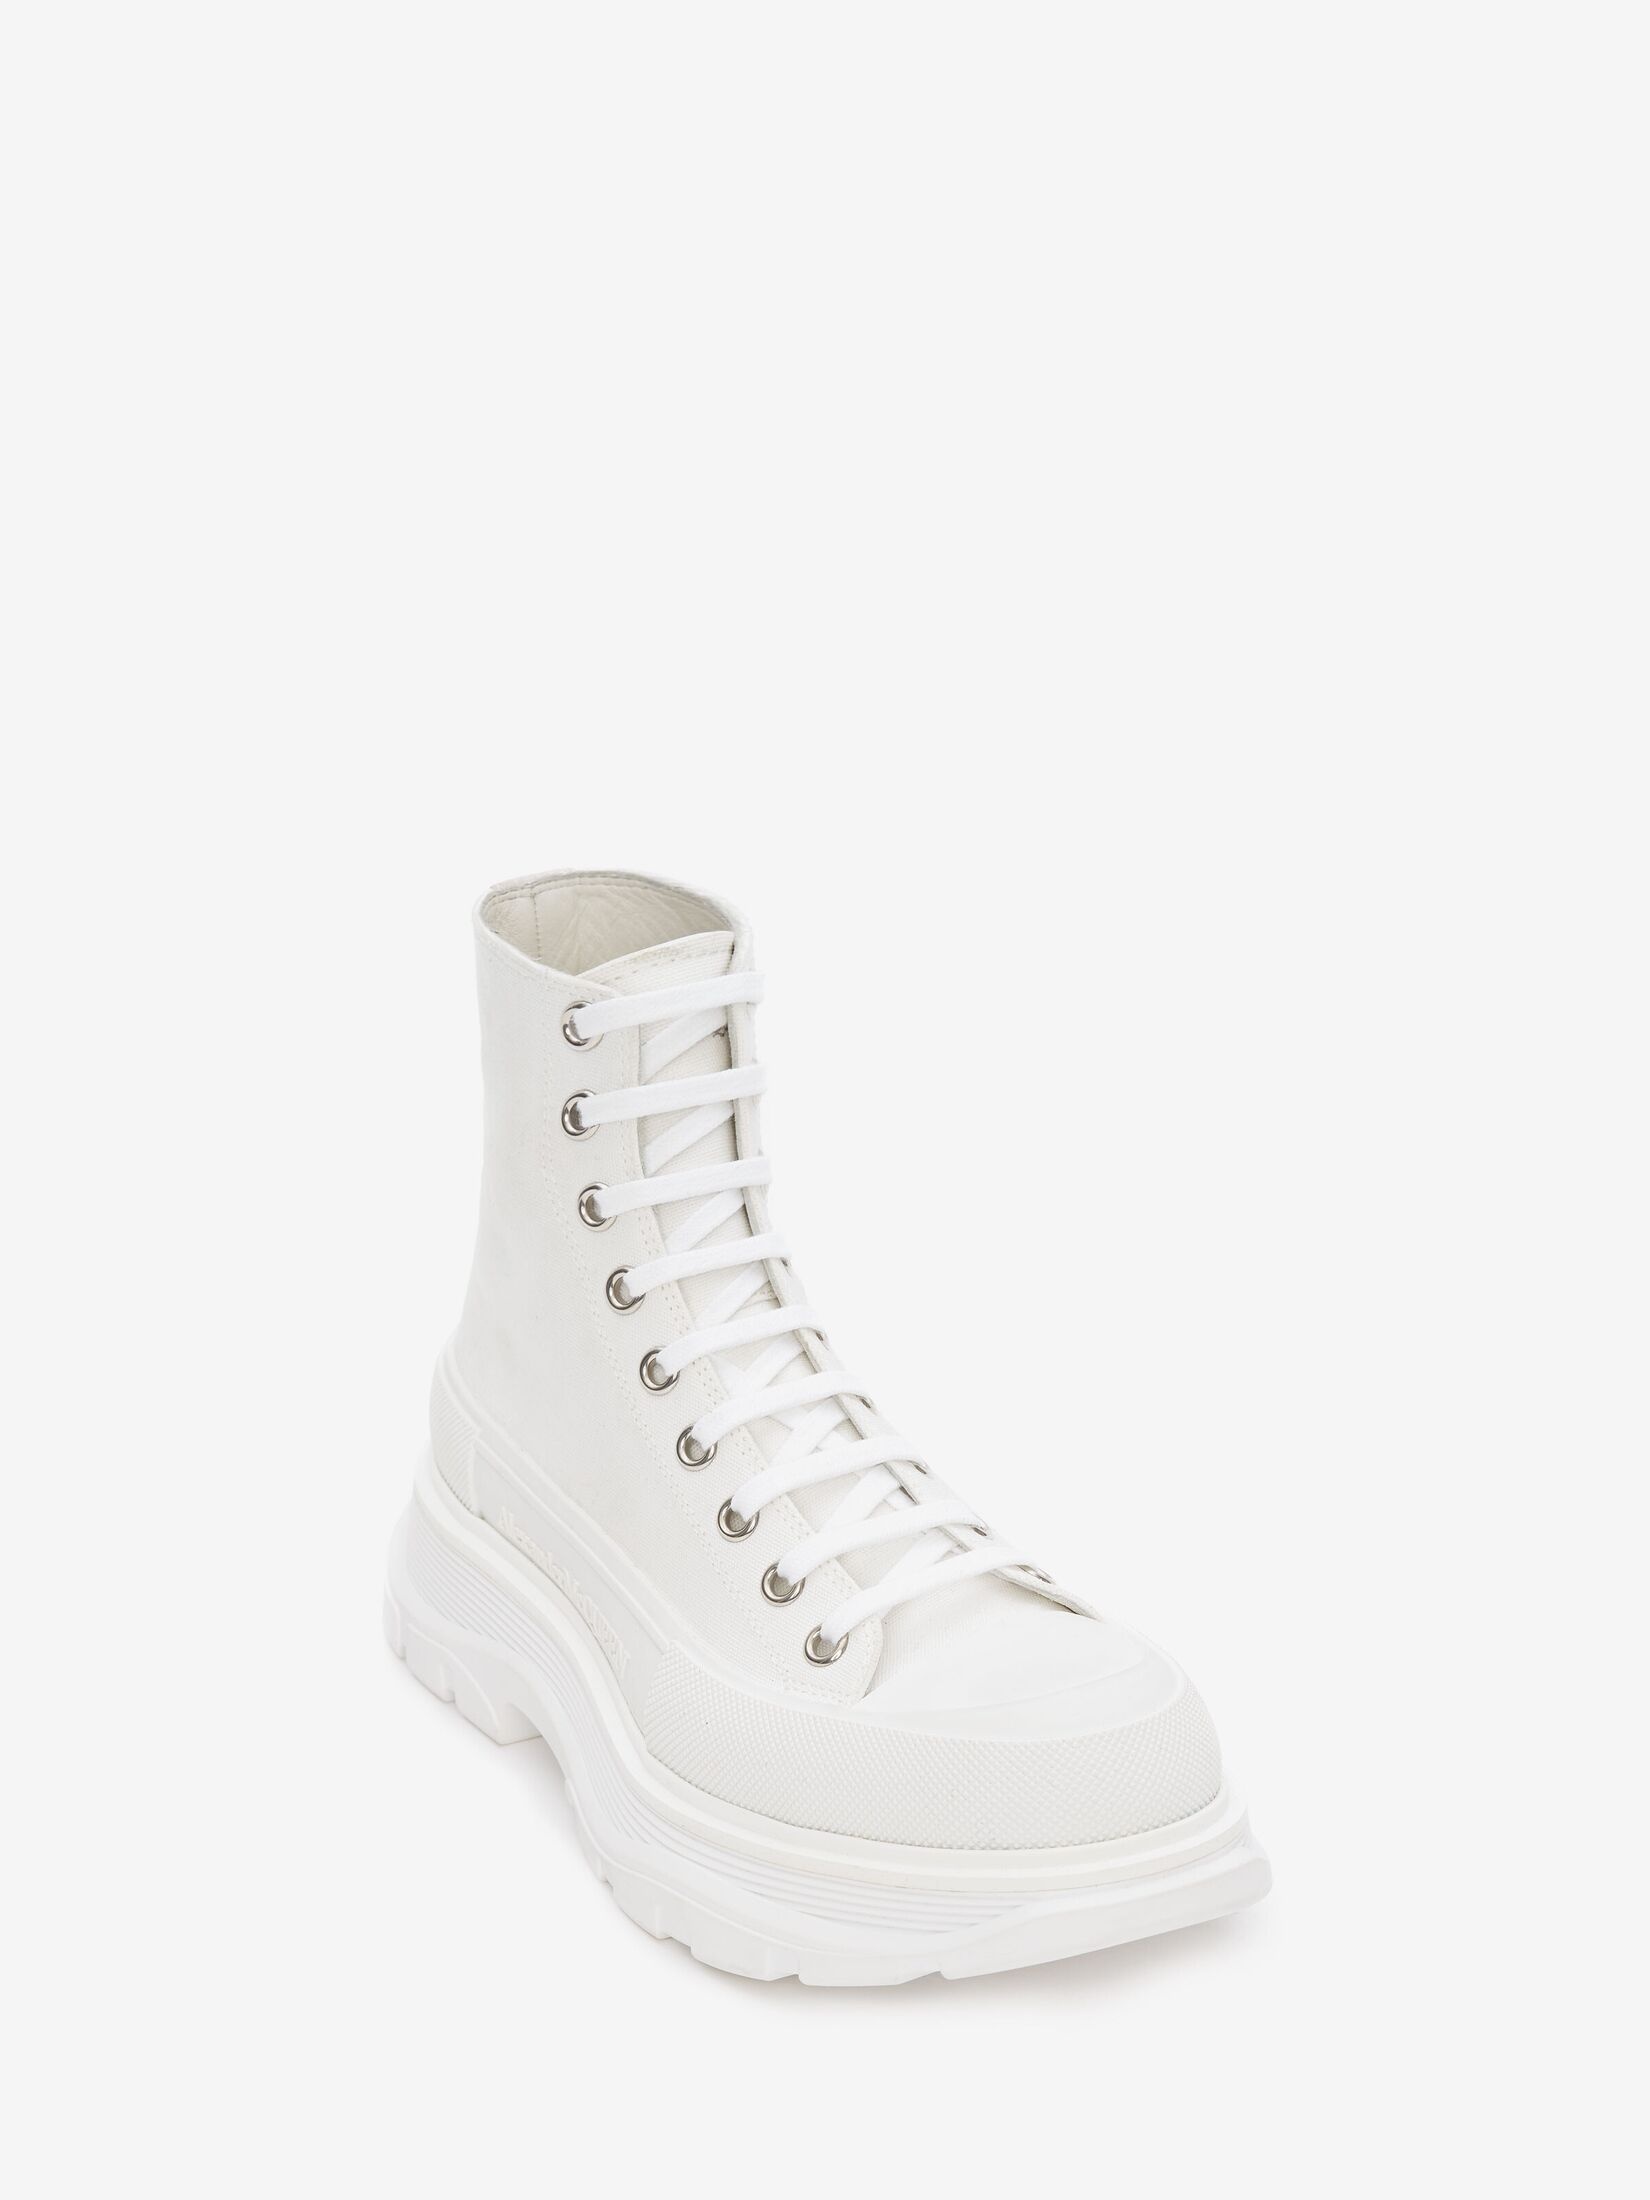 Women's Tread Slick Boot in White - 2